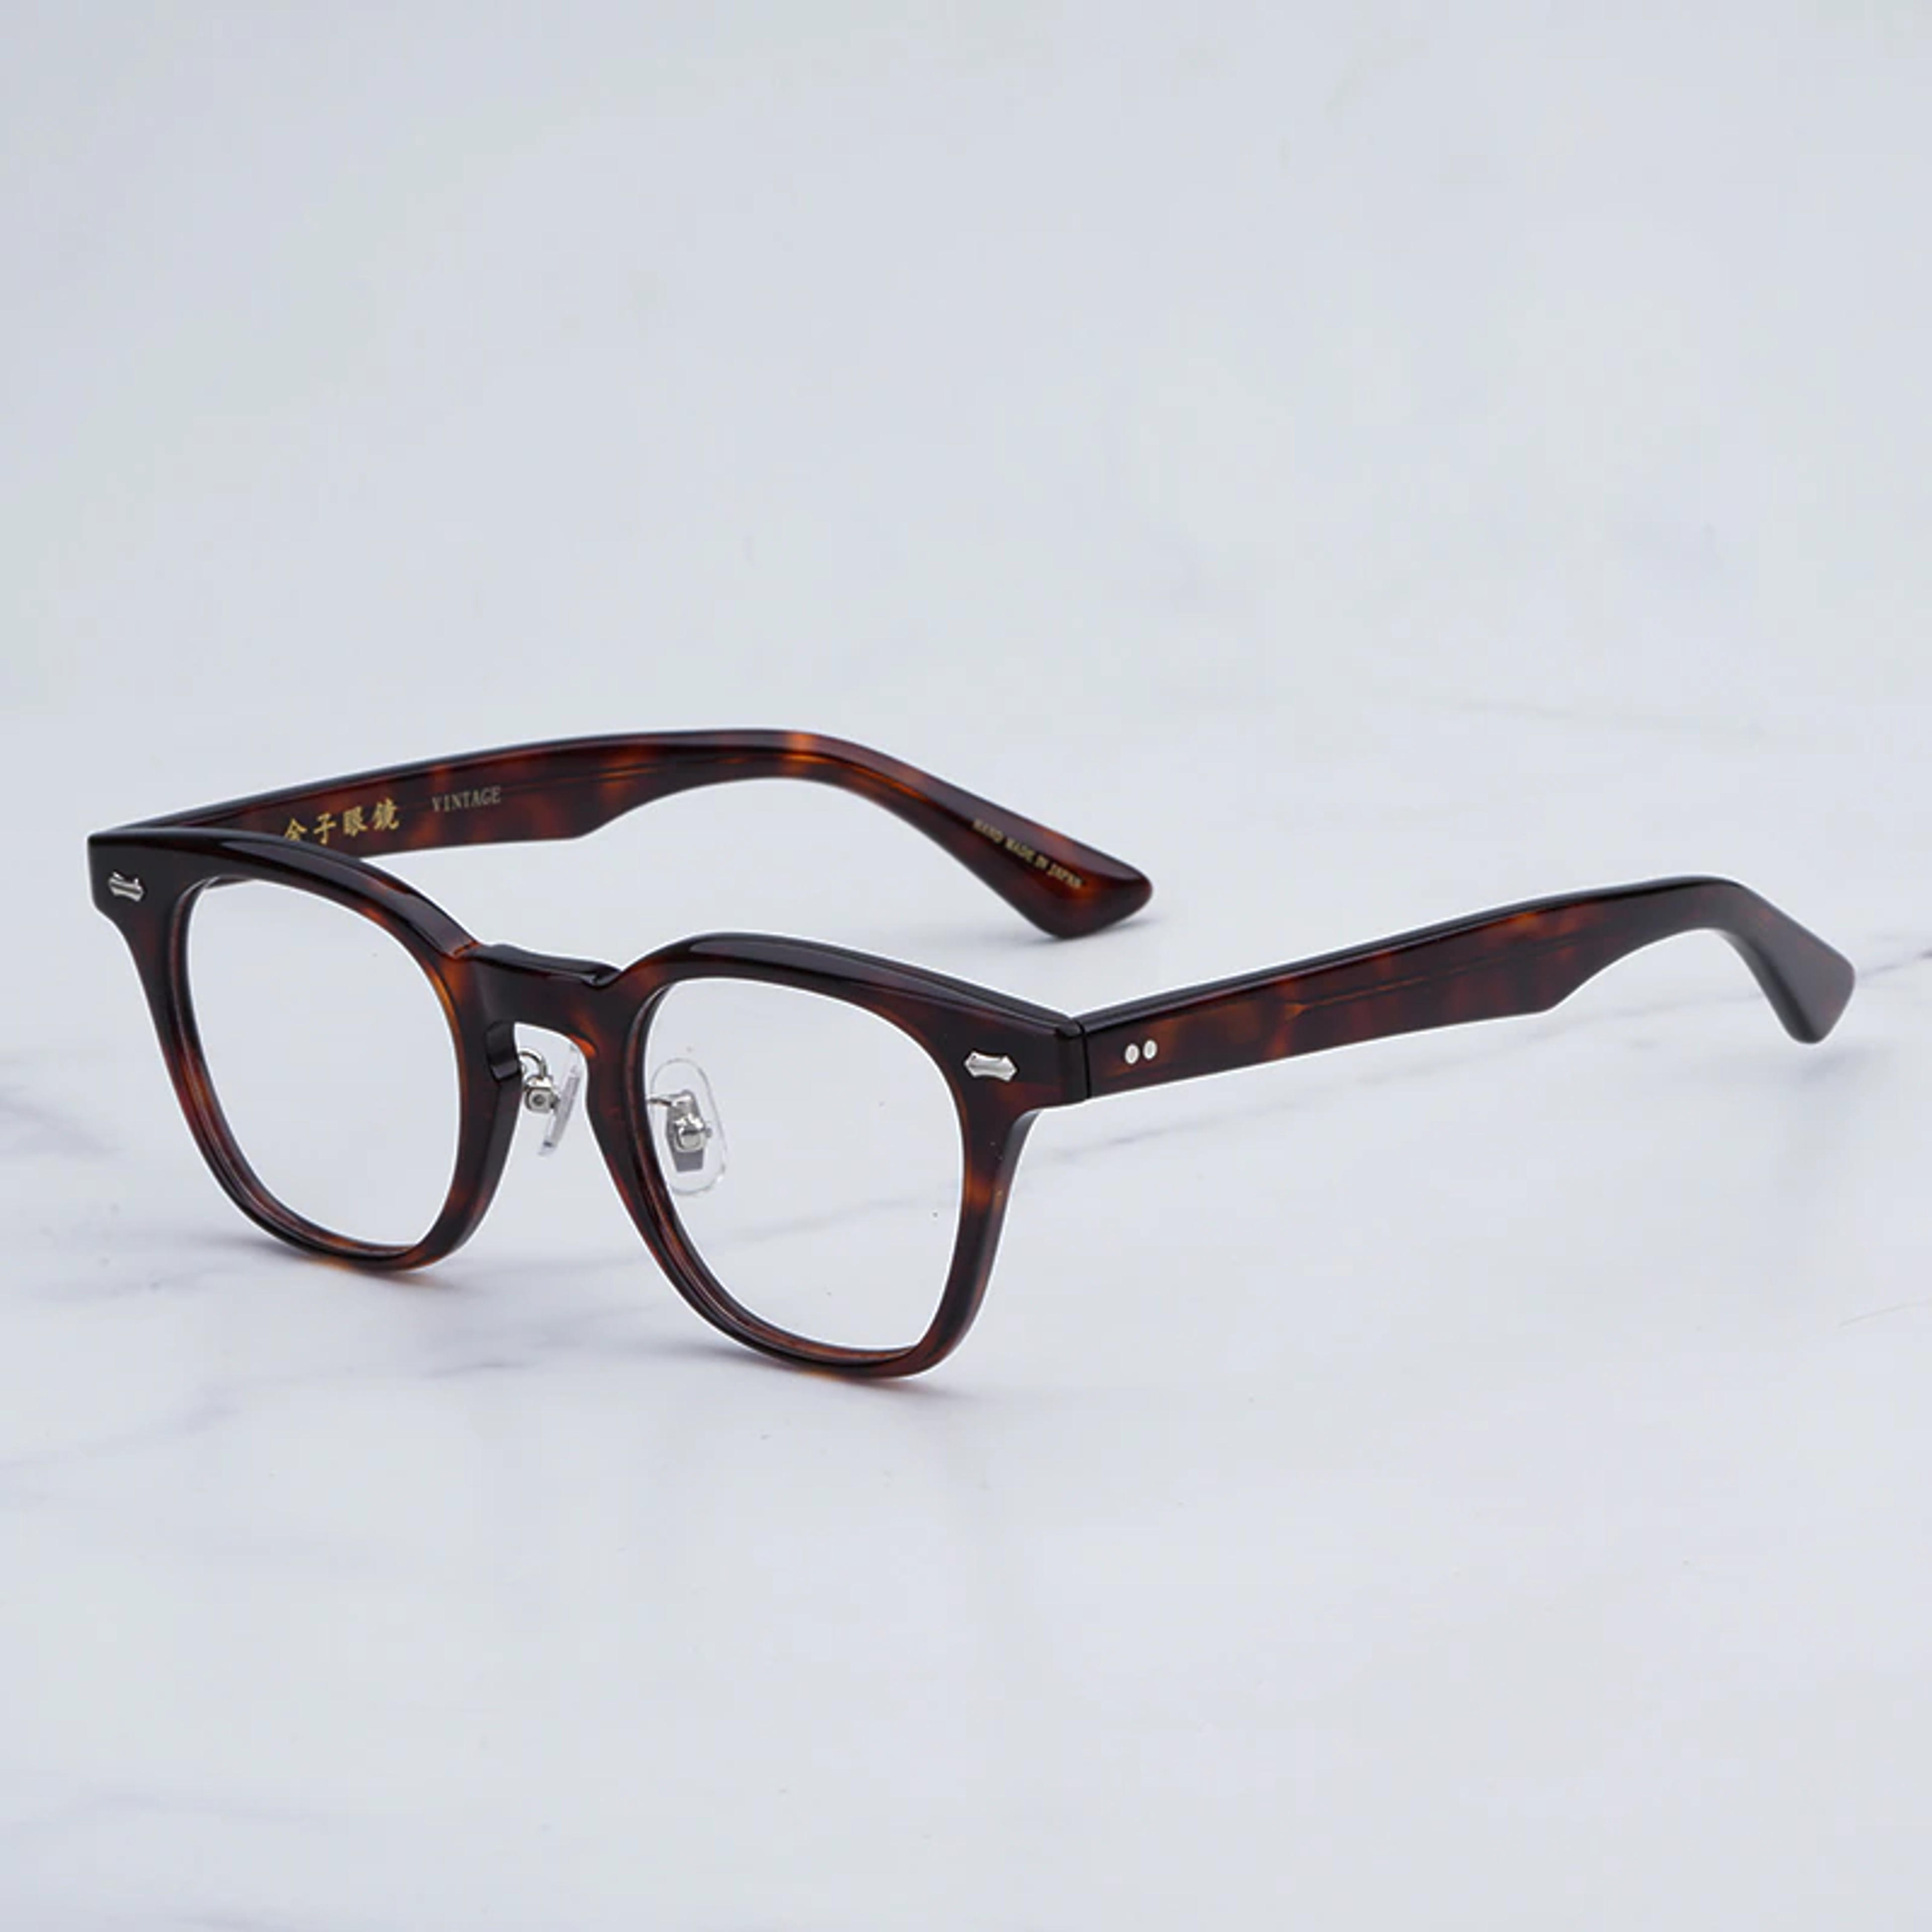 Japanese Eyeglass Frames Brands | Round Tortoise Eyeglass Frames - Acetate - Aliexpress